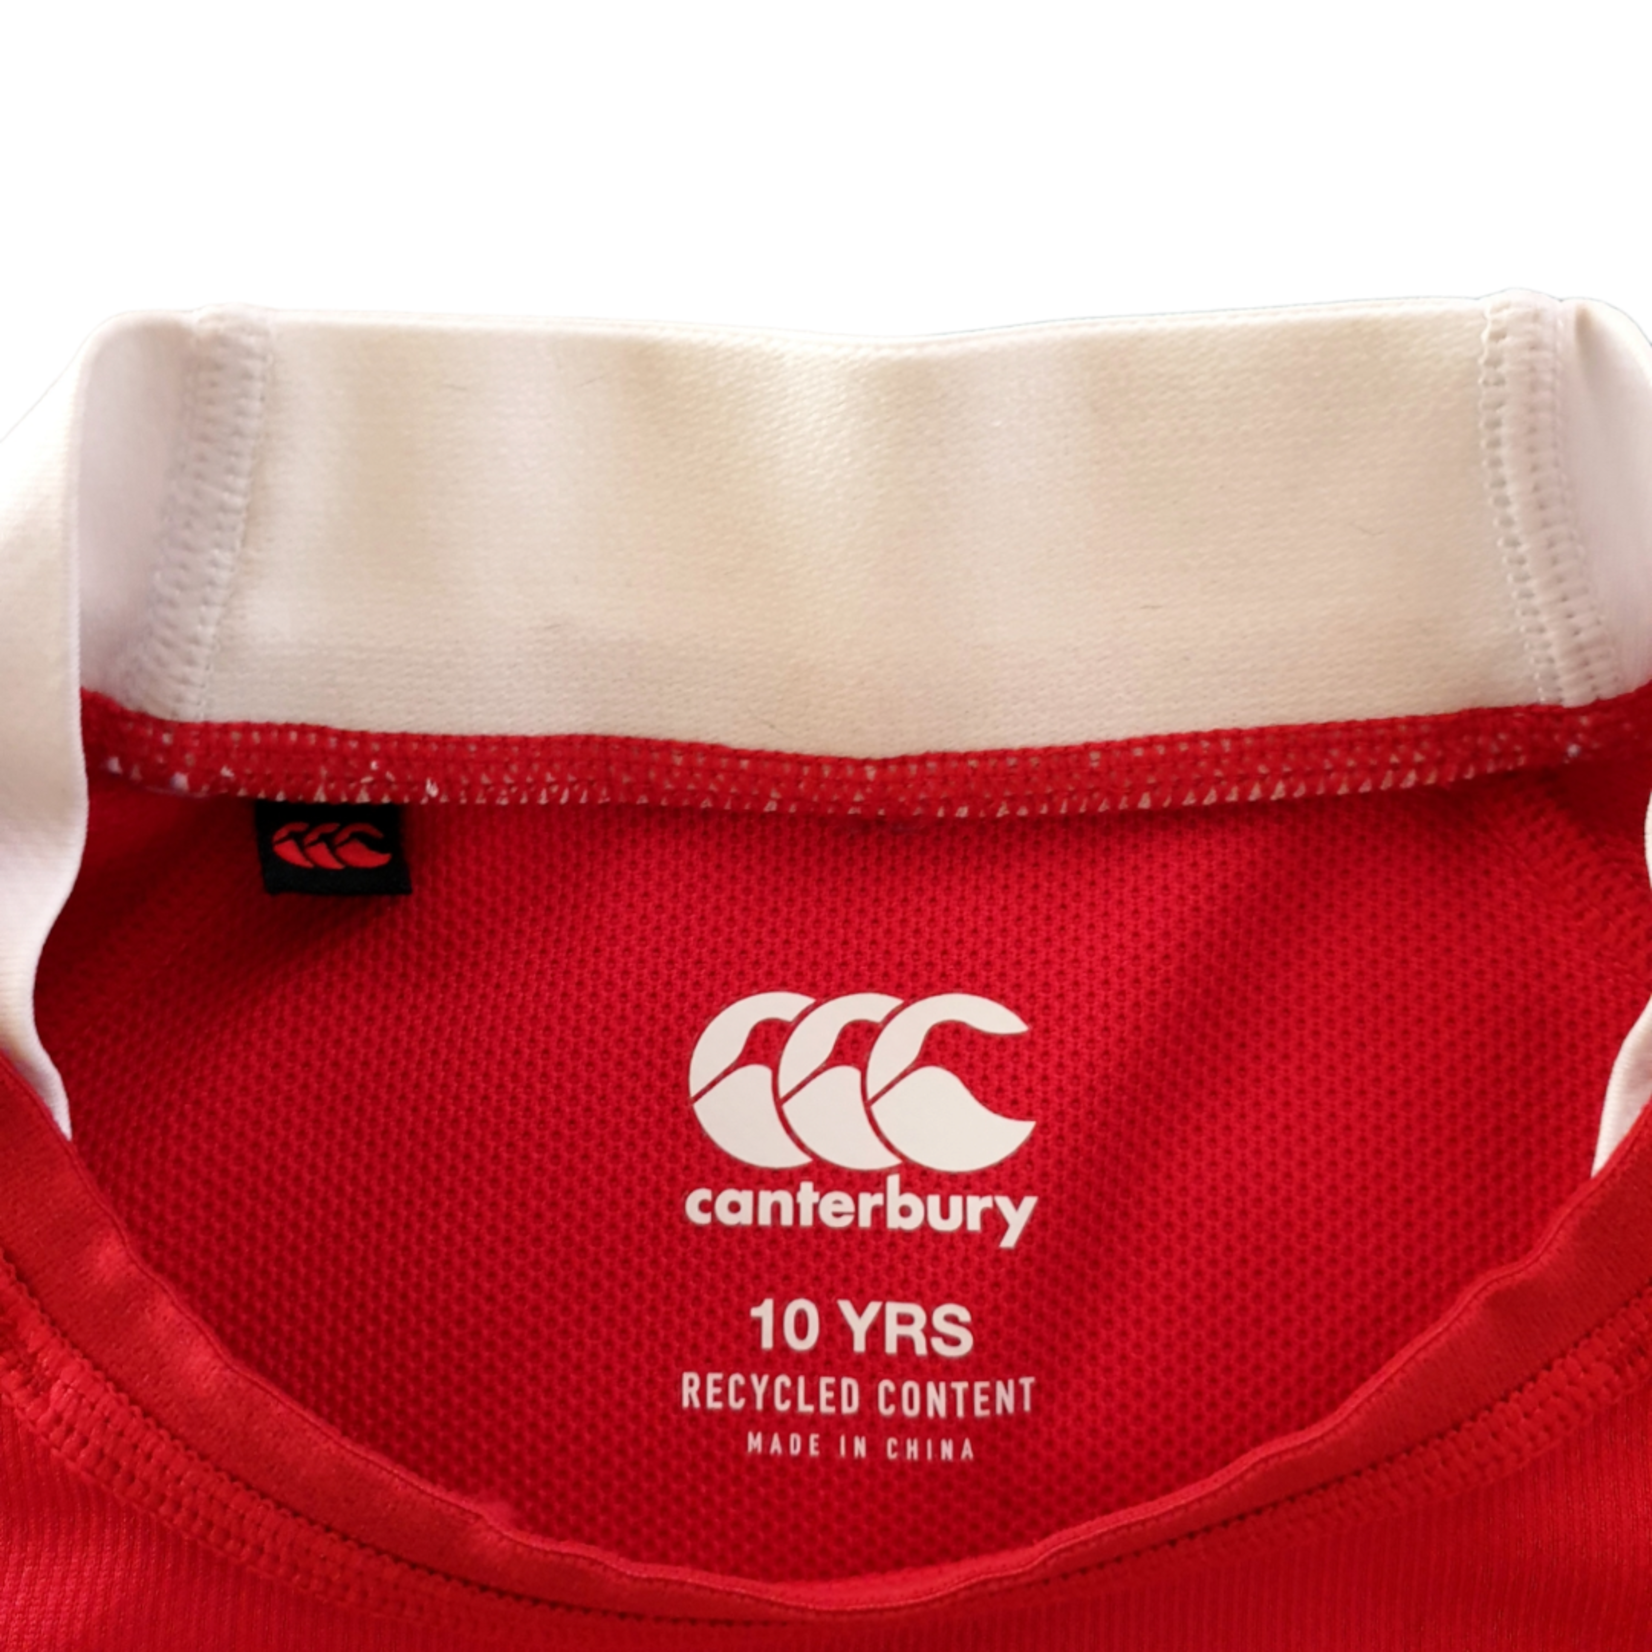 Canterbury Origineel Canterbury vintage rugby shirt British & Irish Lions 2021